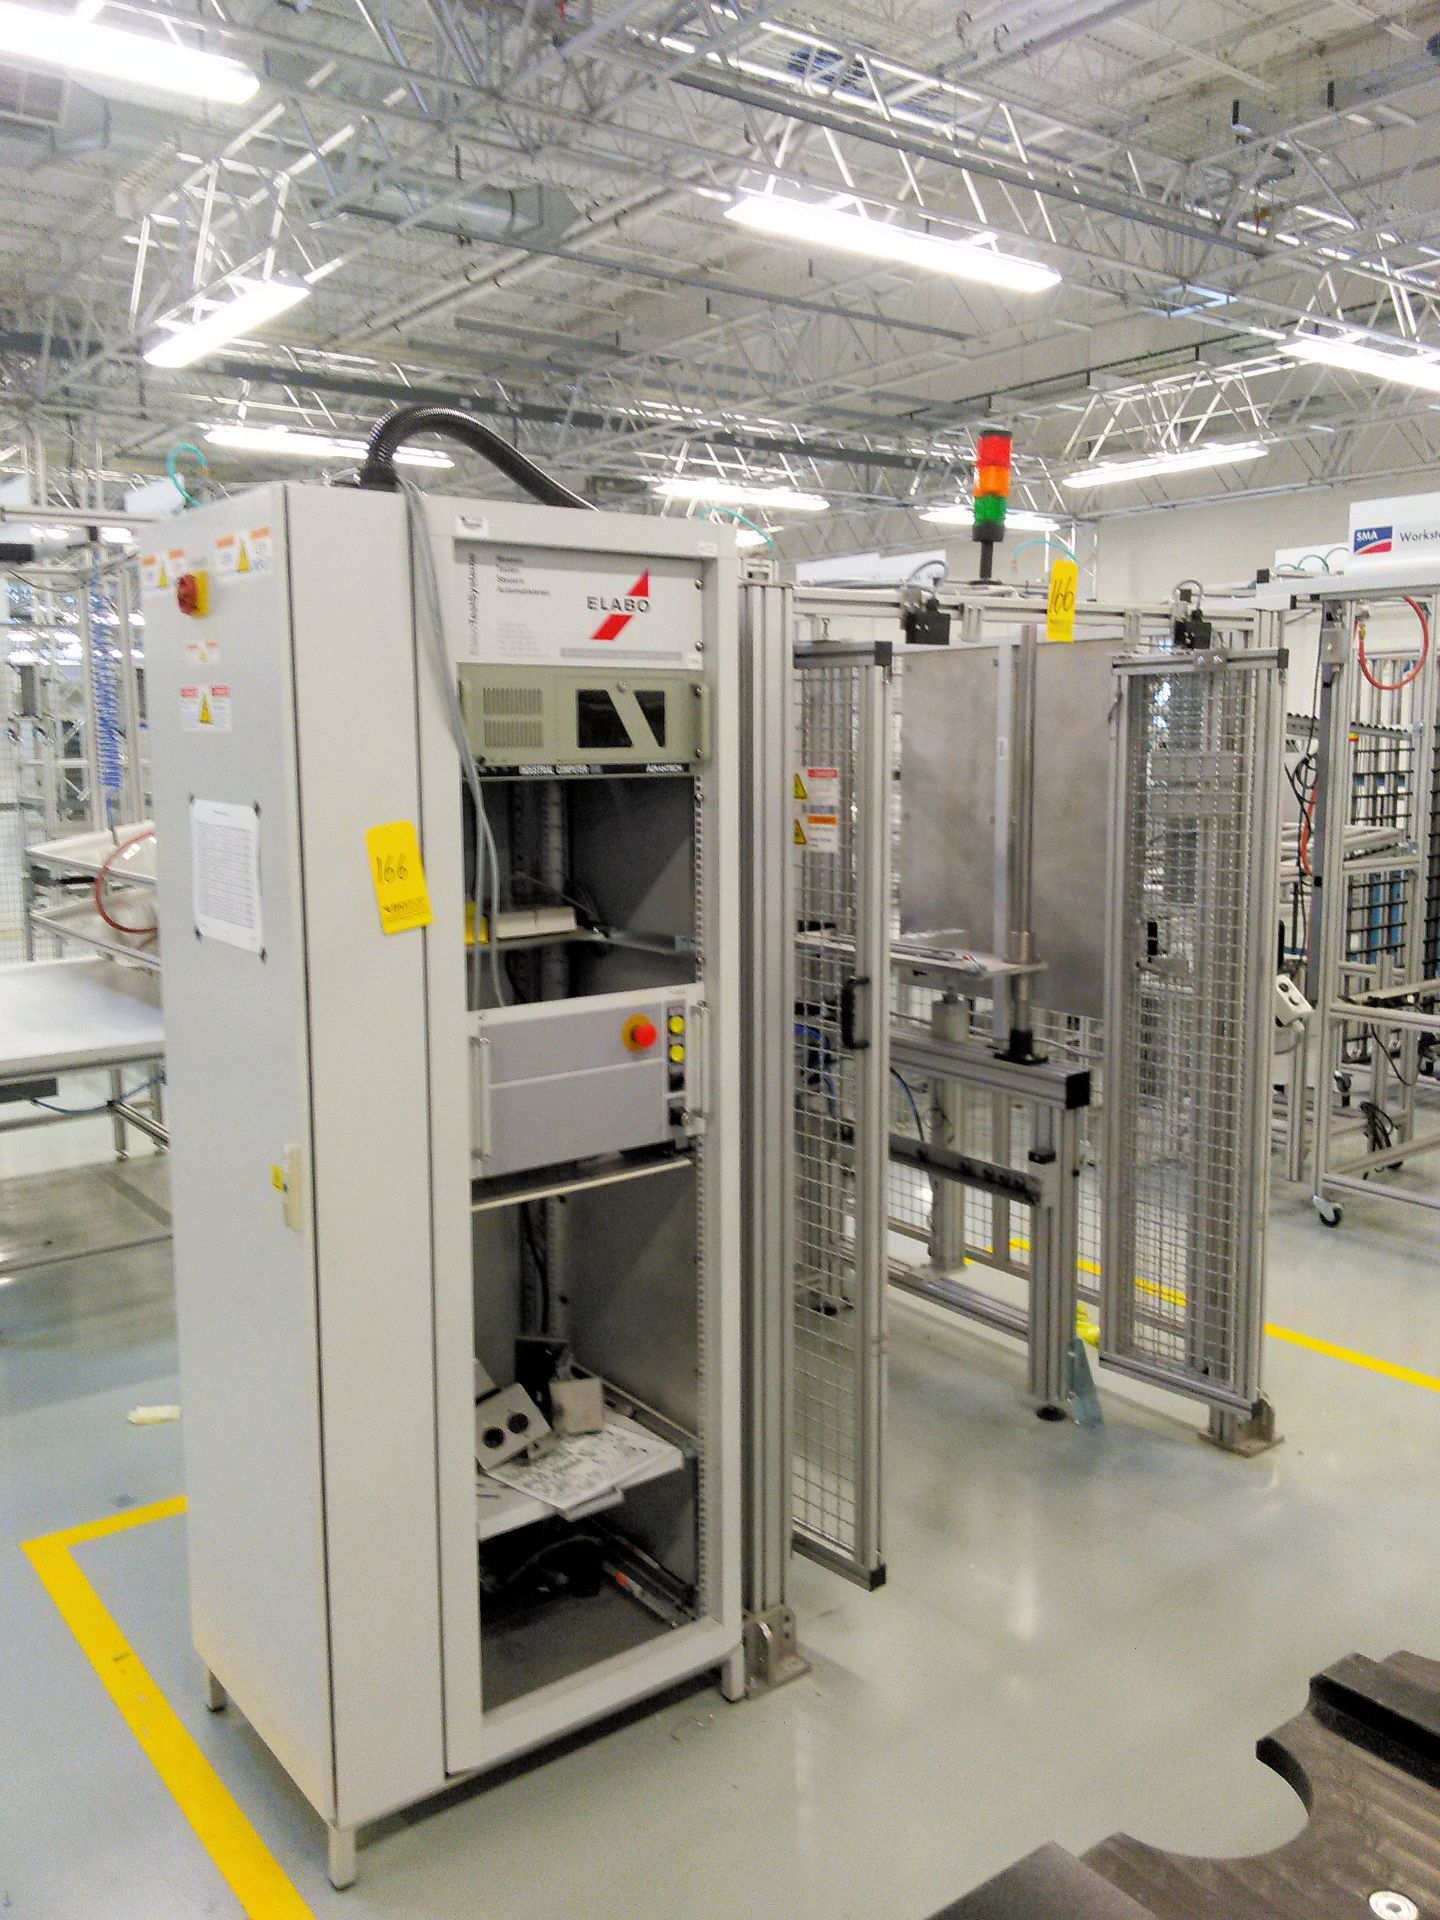 ELABO Safety Test System for PV-Inverter, Consisting of Caged Test Station, Elabo System Cabinet - Image 3 of 3